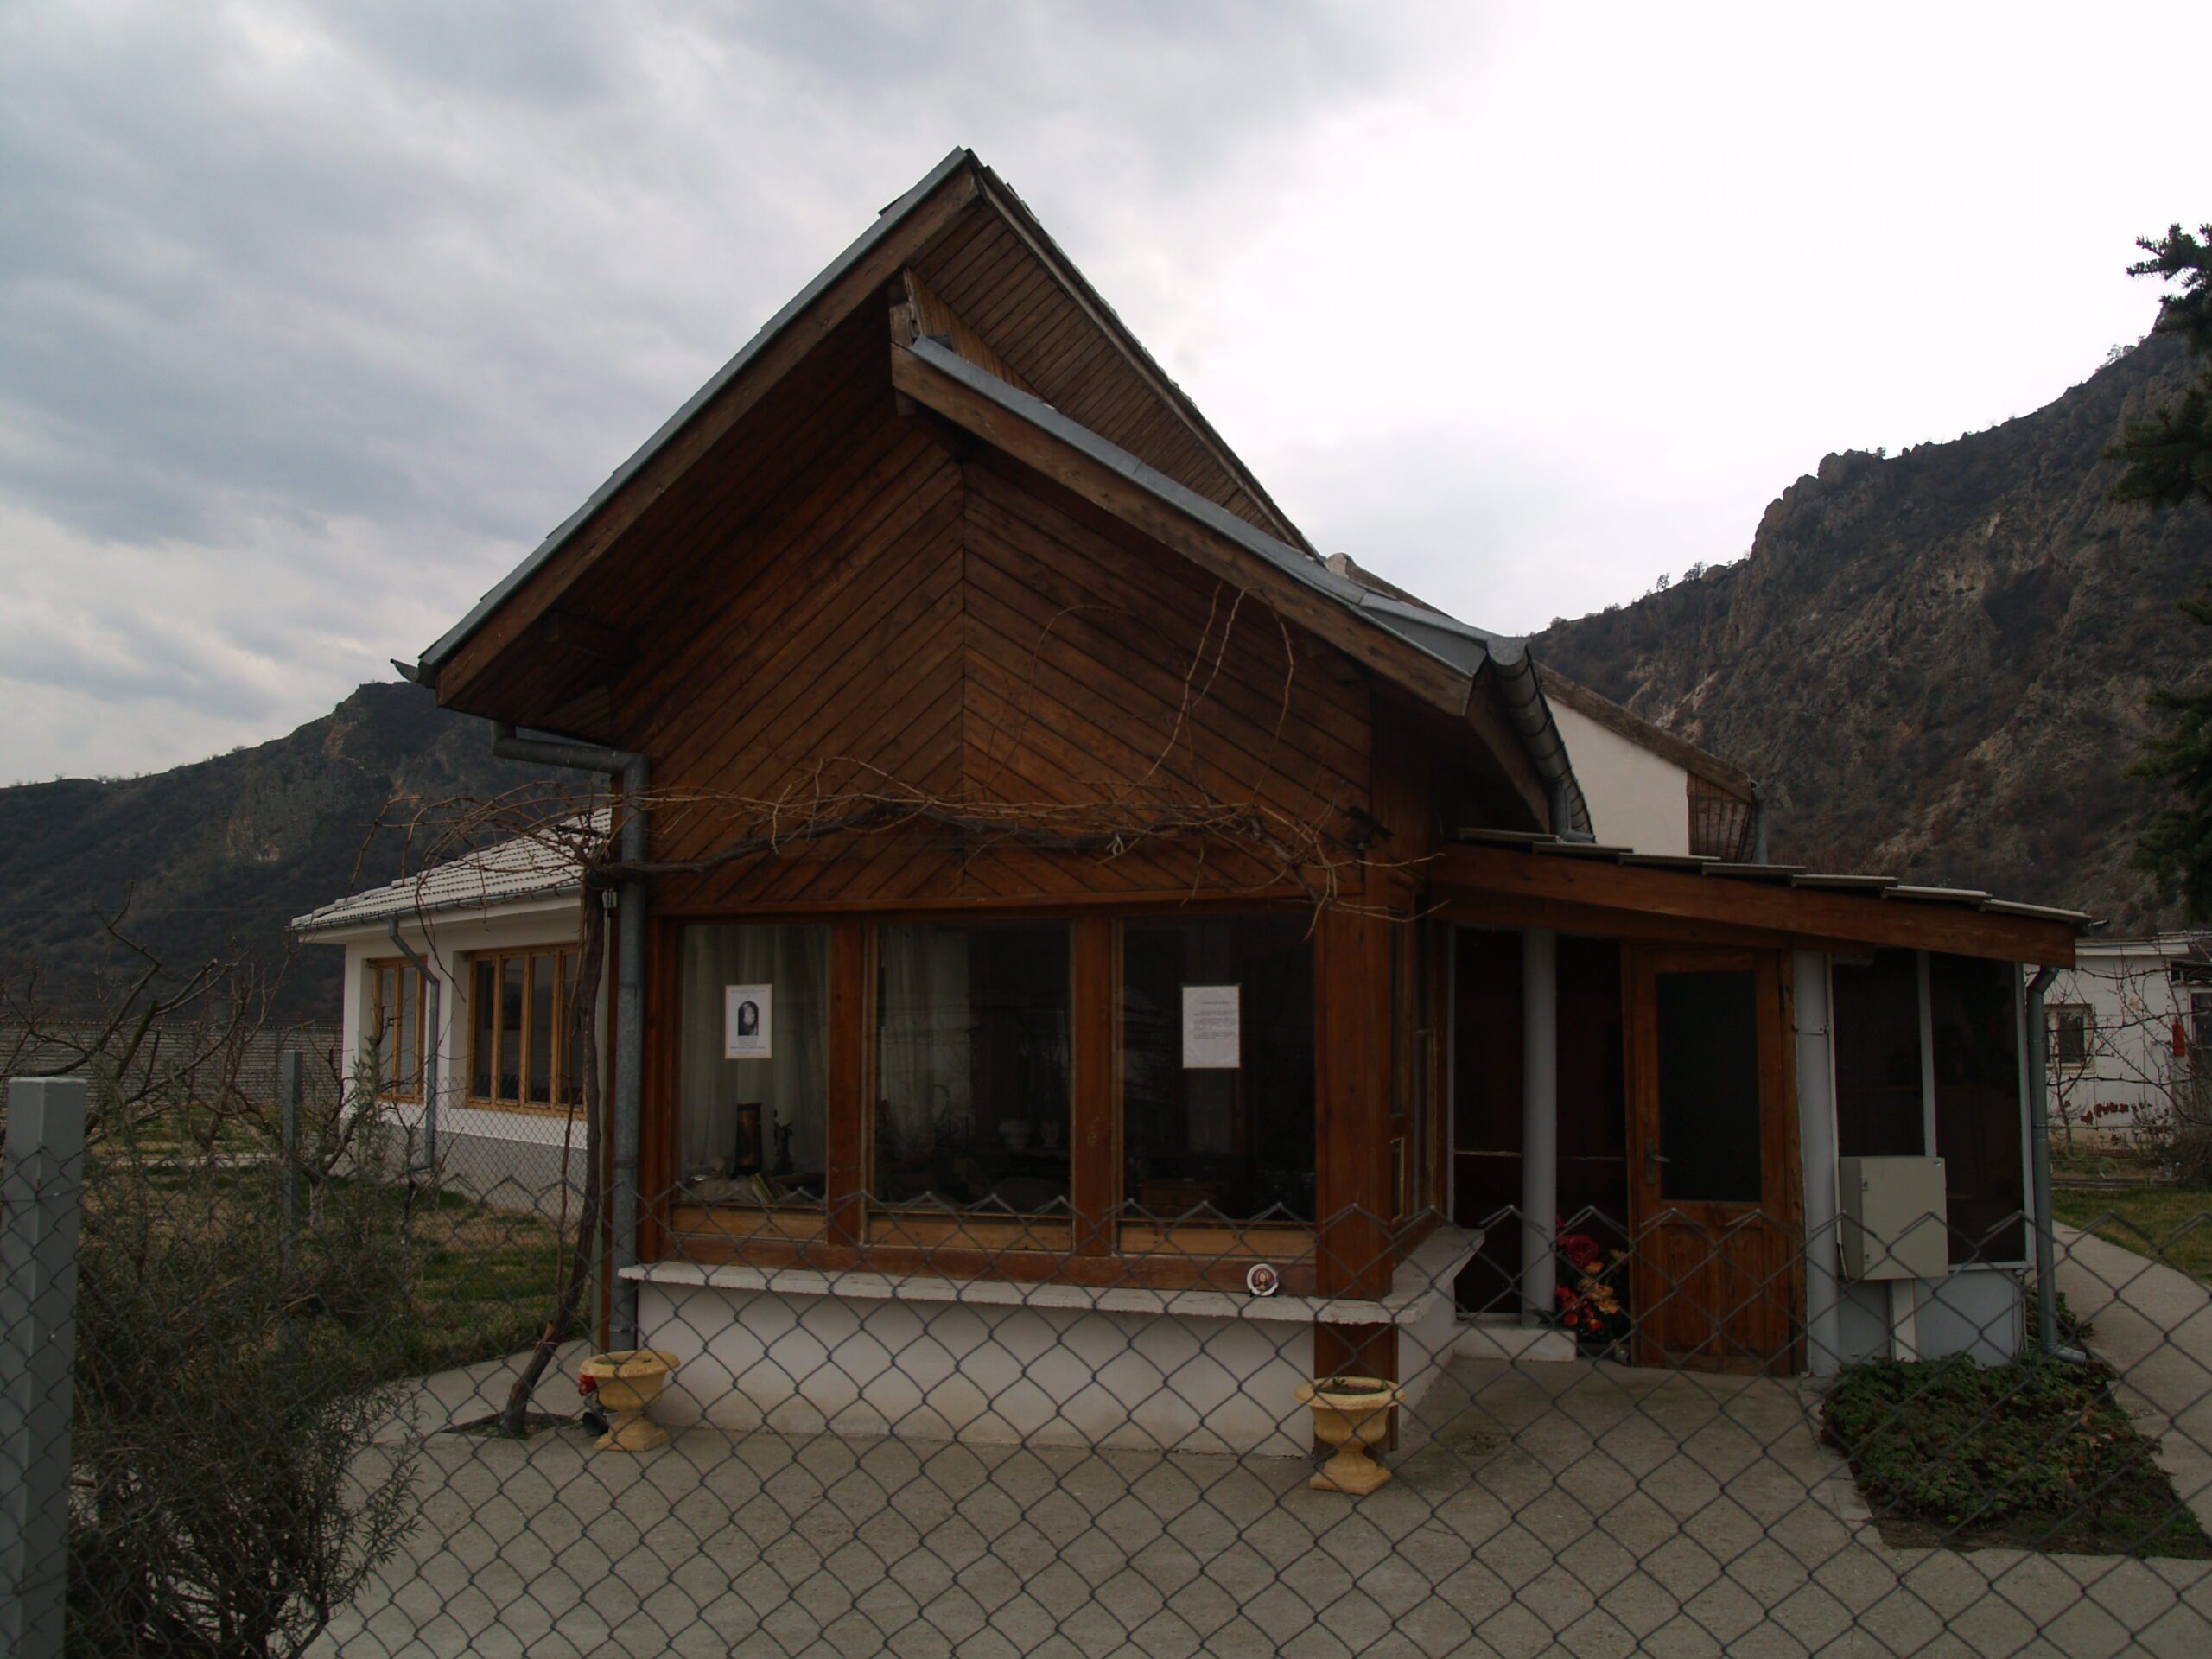 Vanga's house in Rupite, Petrich (built in 1970)